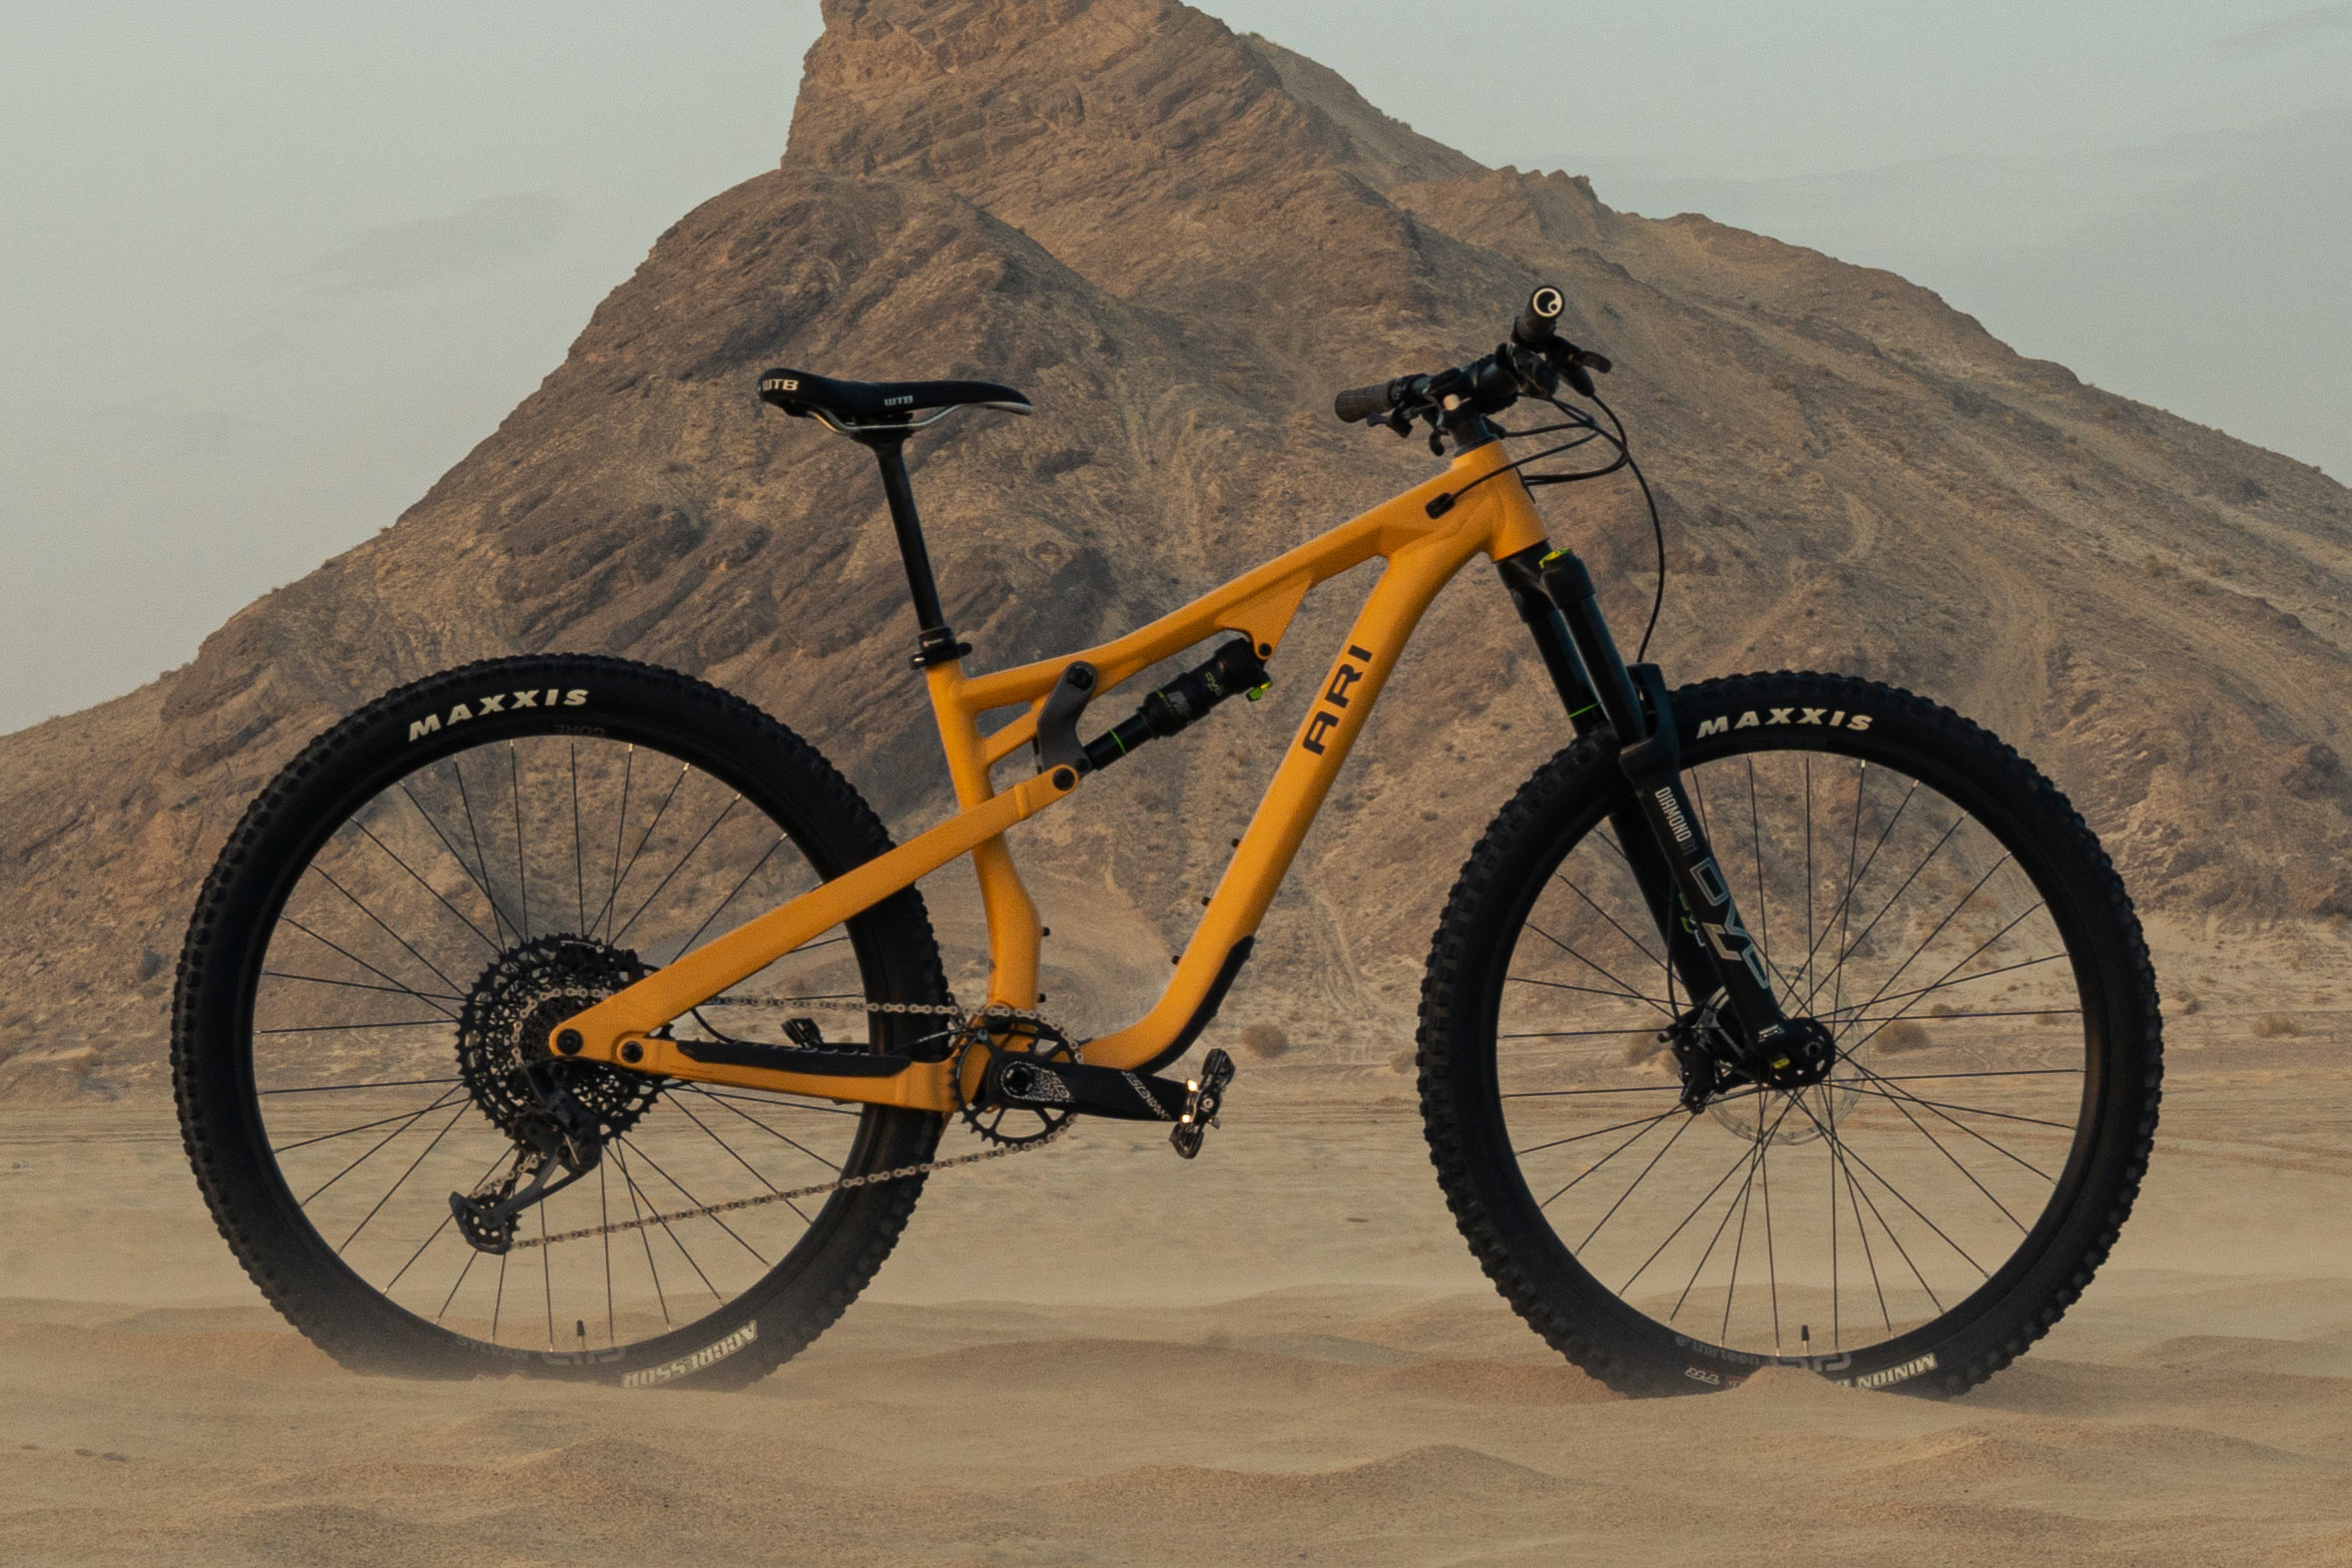 ari cascade alloy trail bike shown in the desert